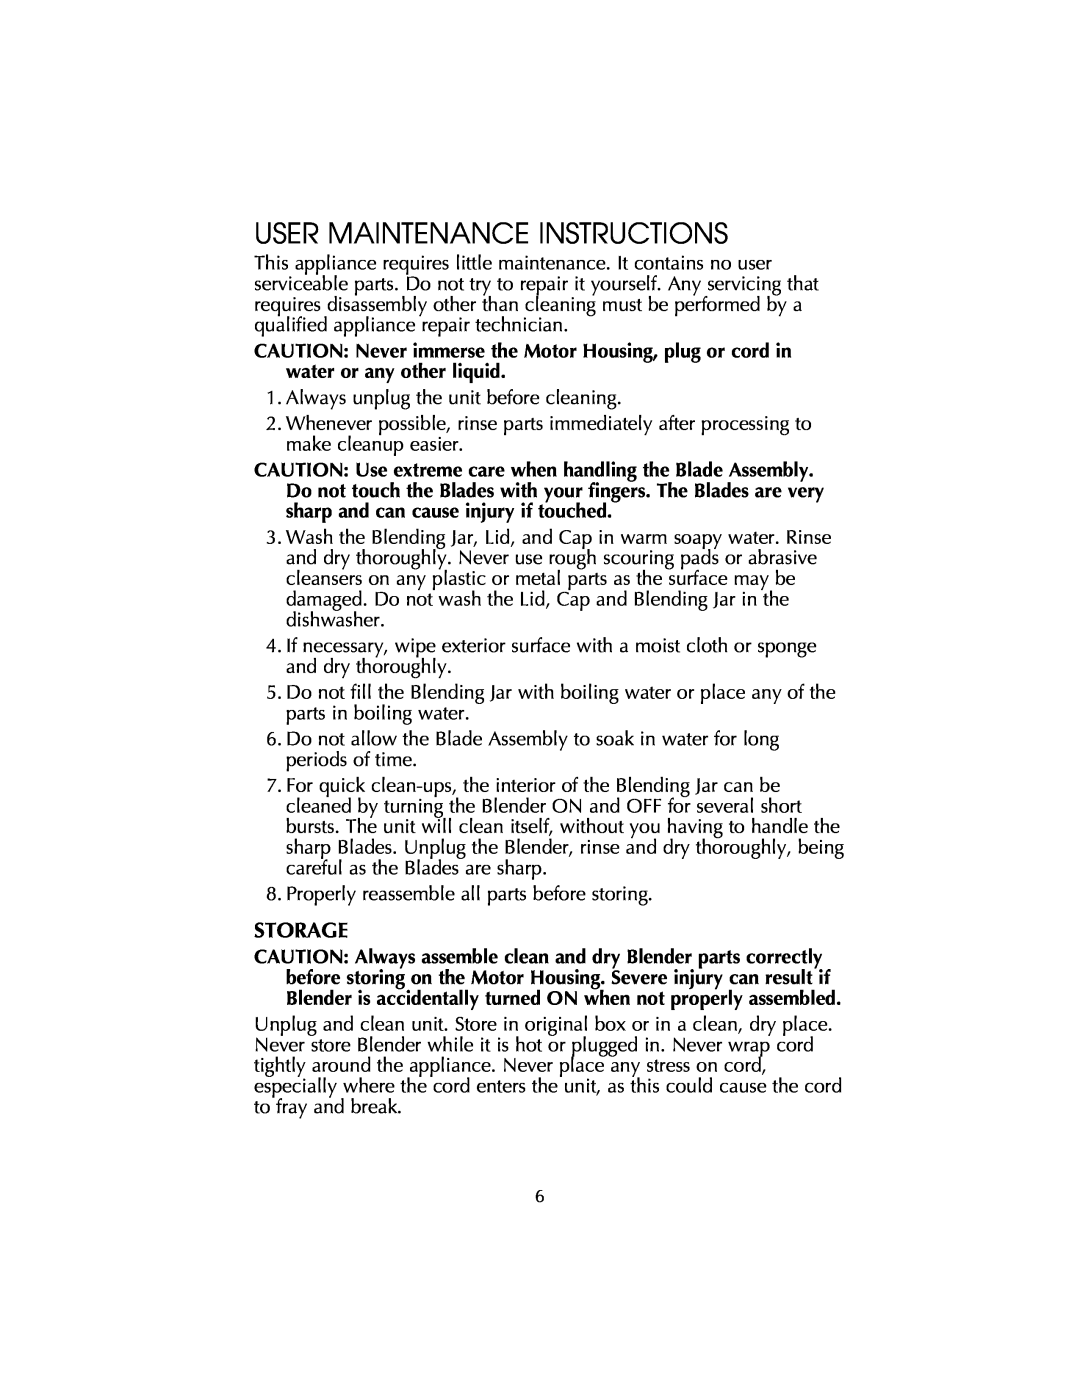 Salton BL22 owner manual User Maintenance Instructions, Storage 